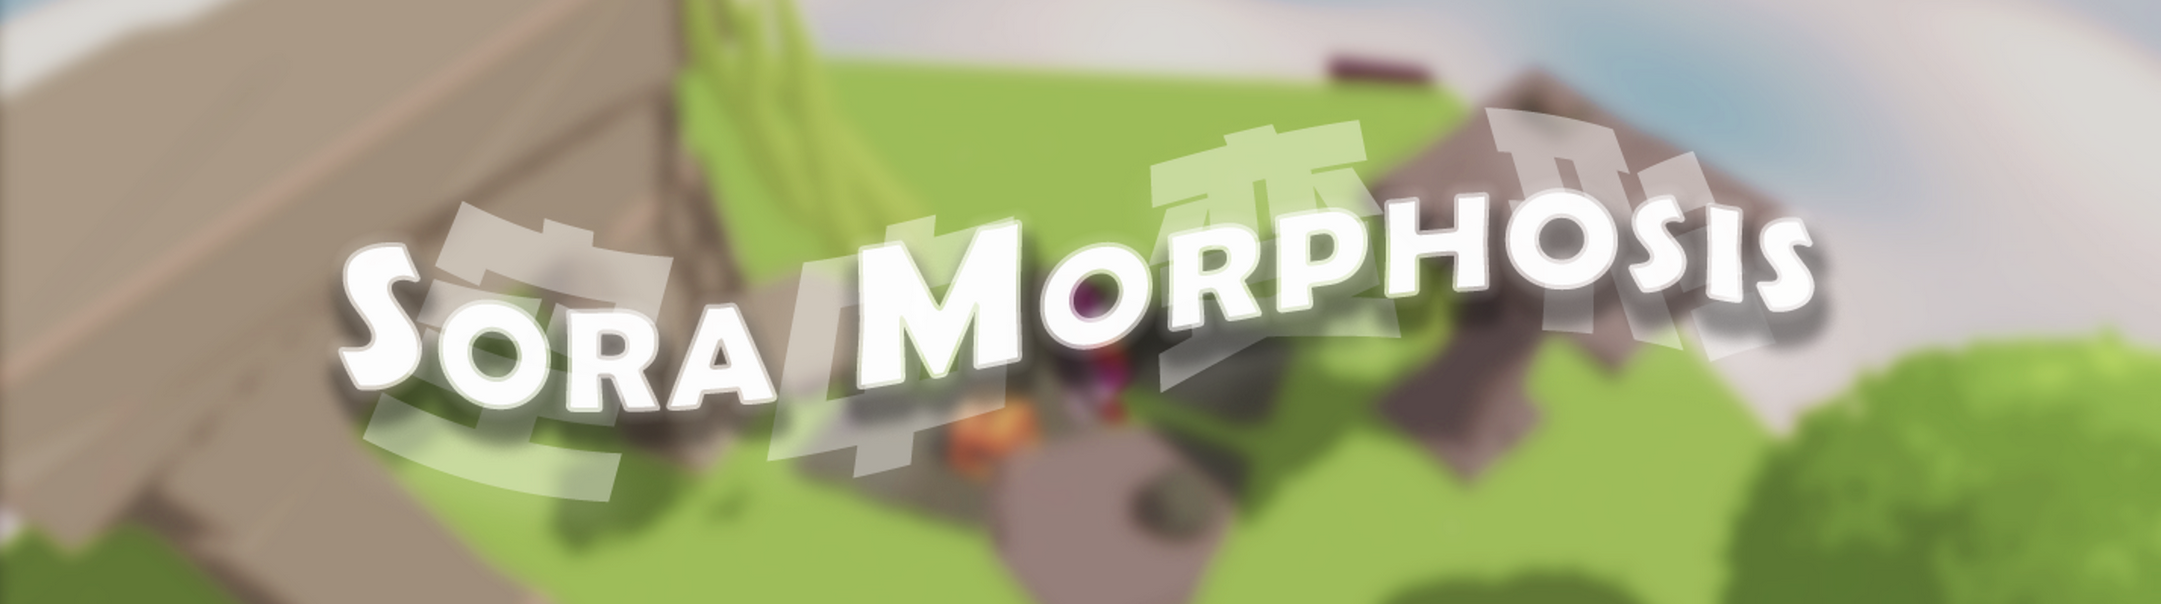 Sora Morphosis